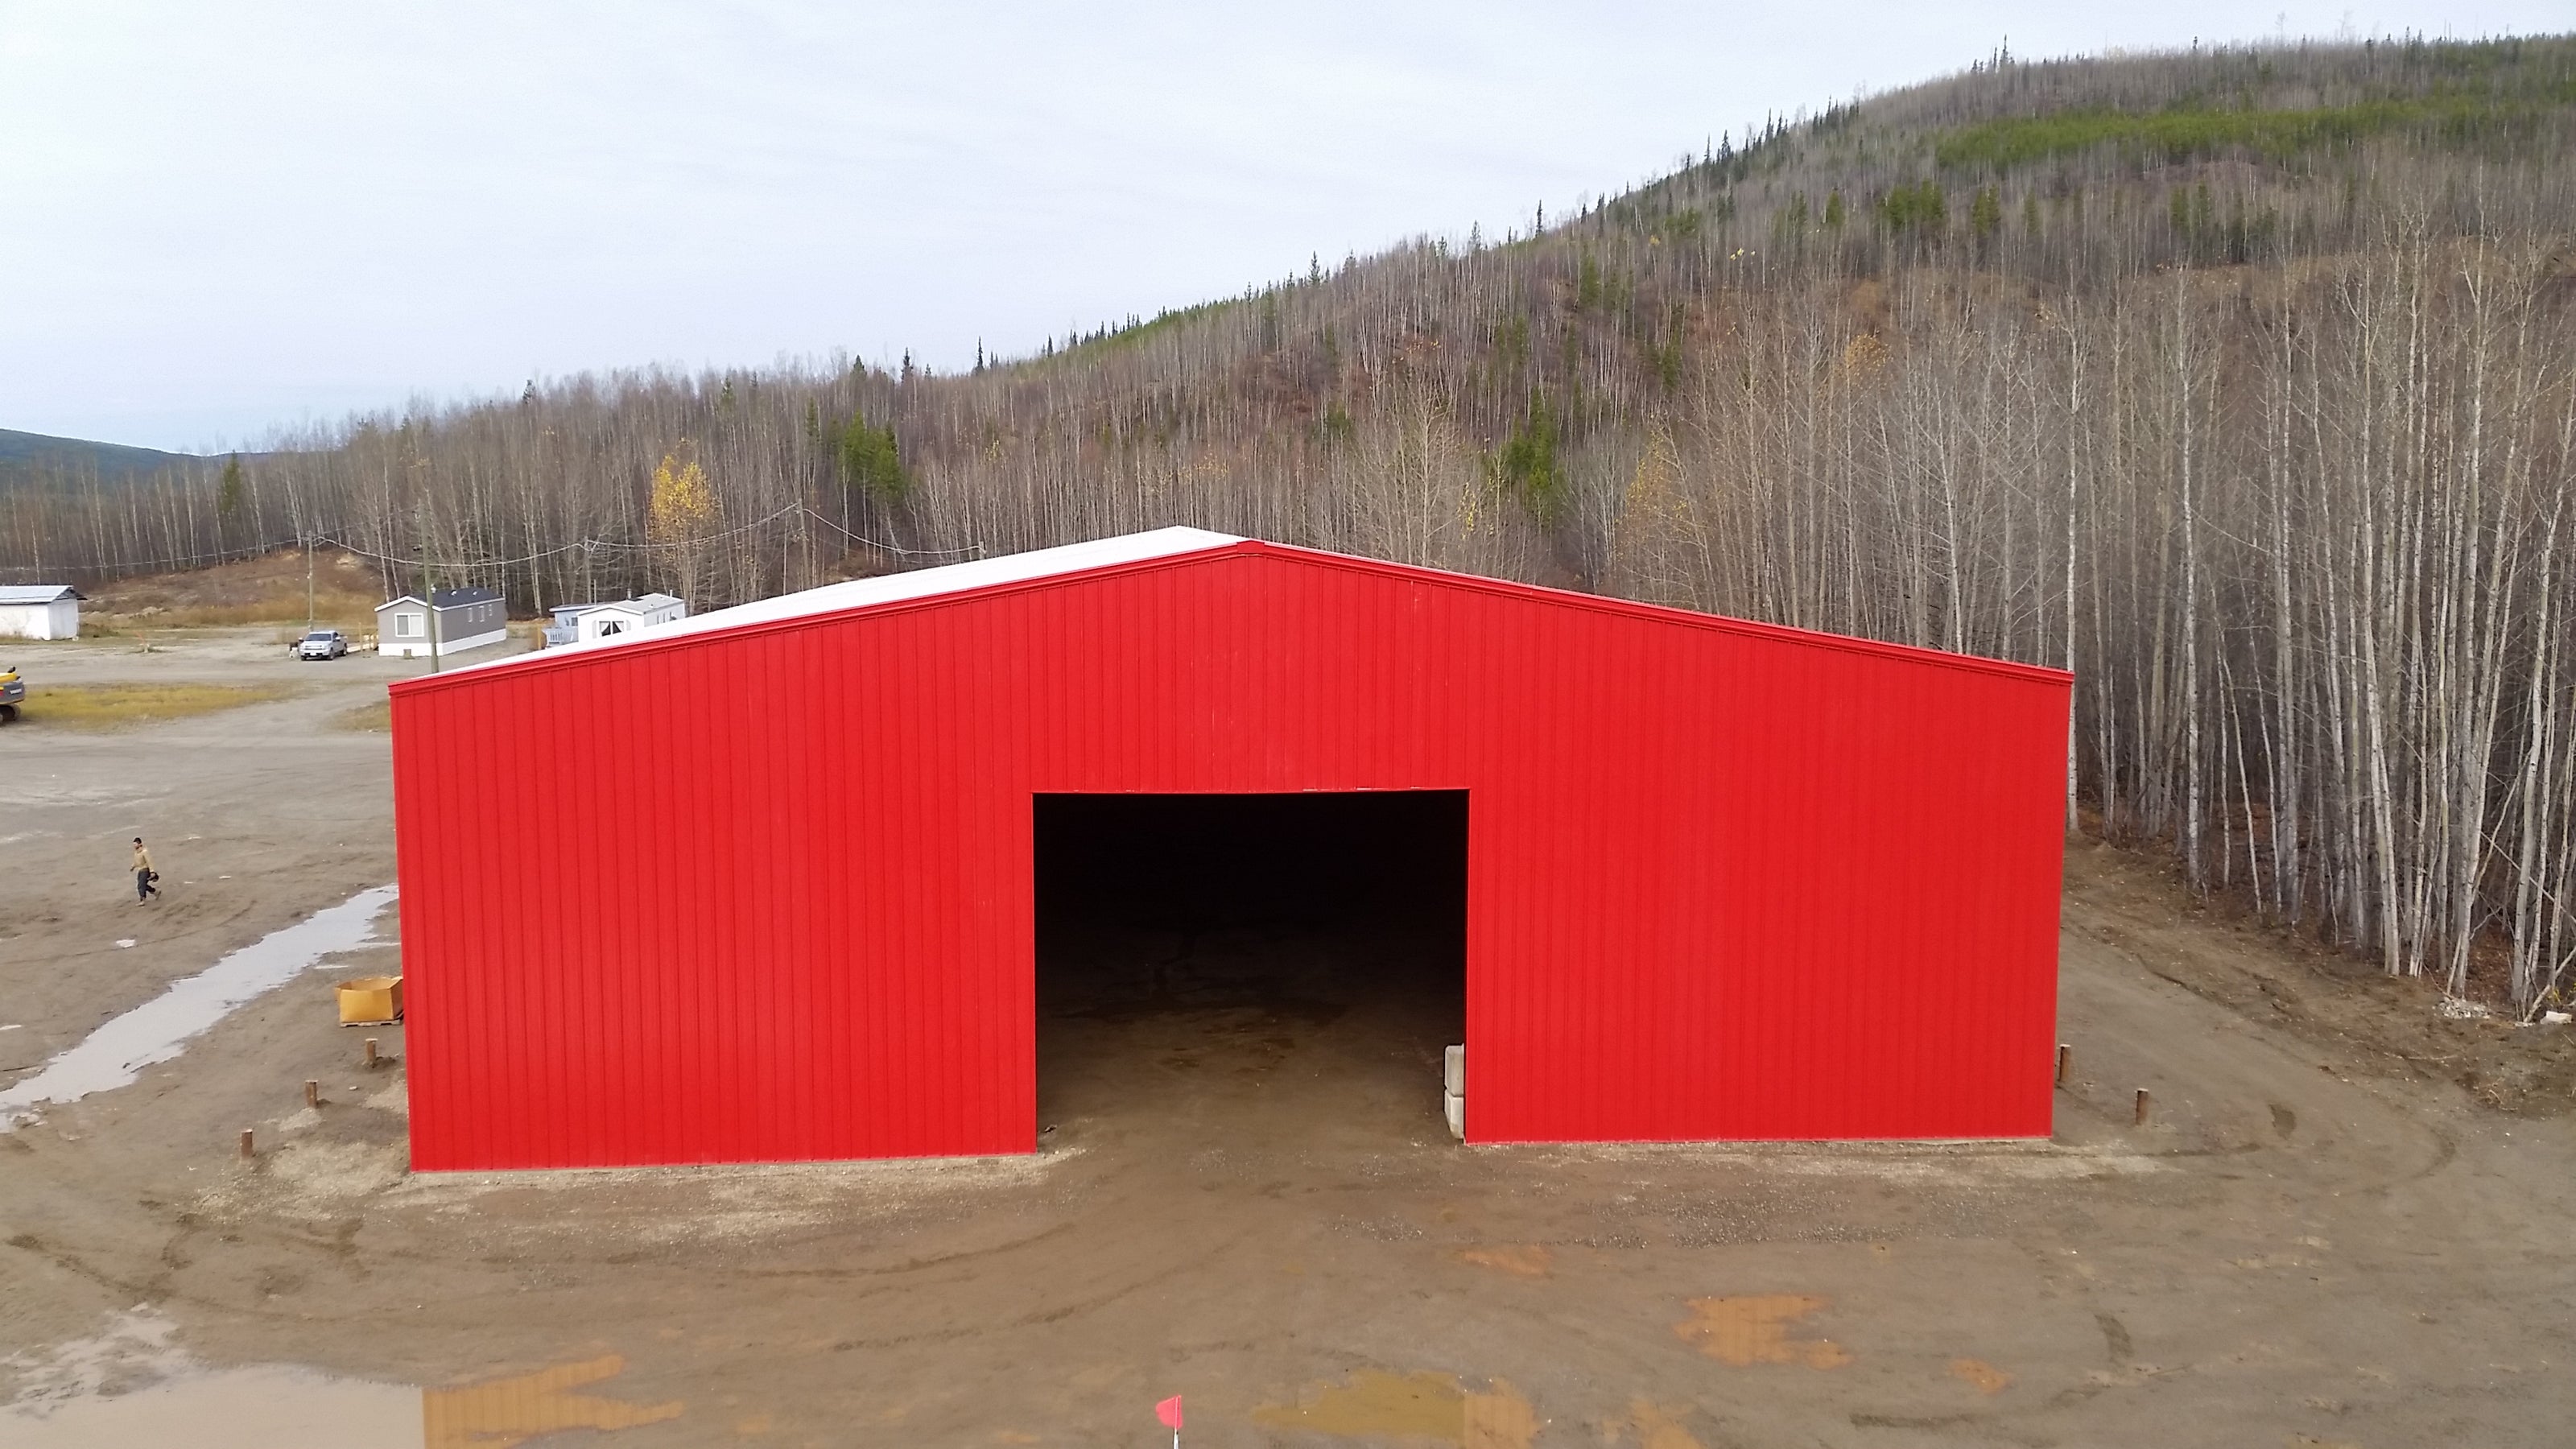 Rigid Frame Metal Building For Road Salt Storage - Front View